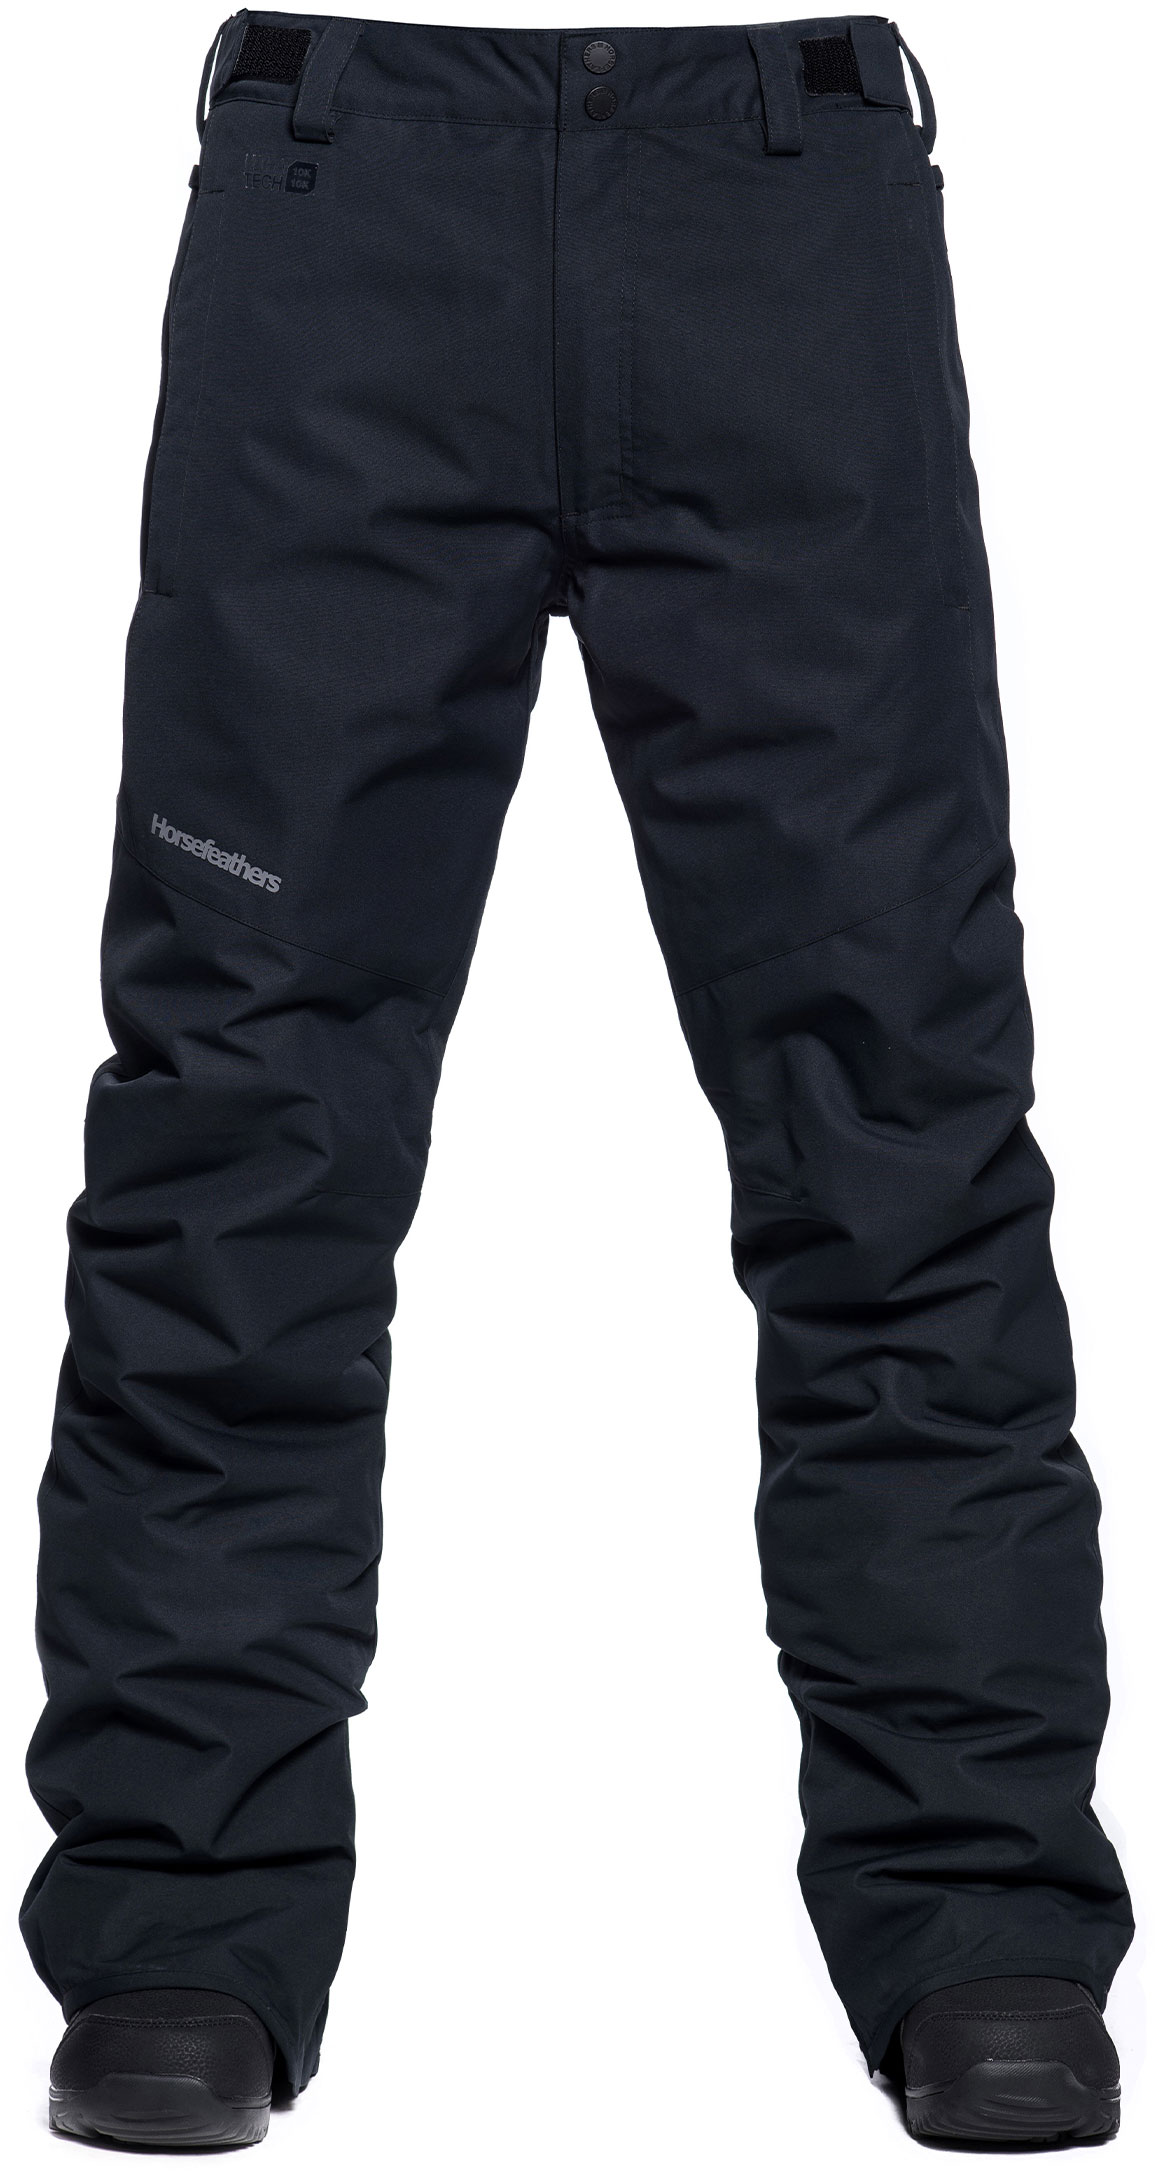 Men's ski/snowboard pants